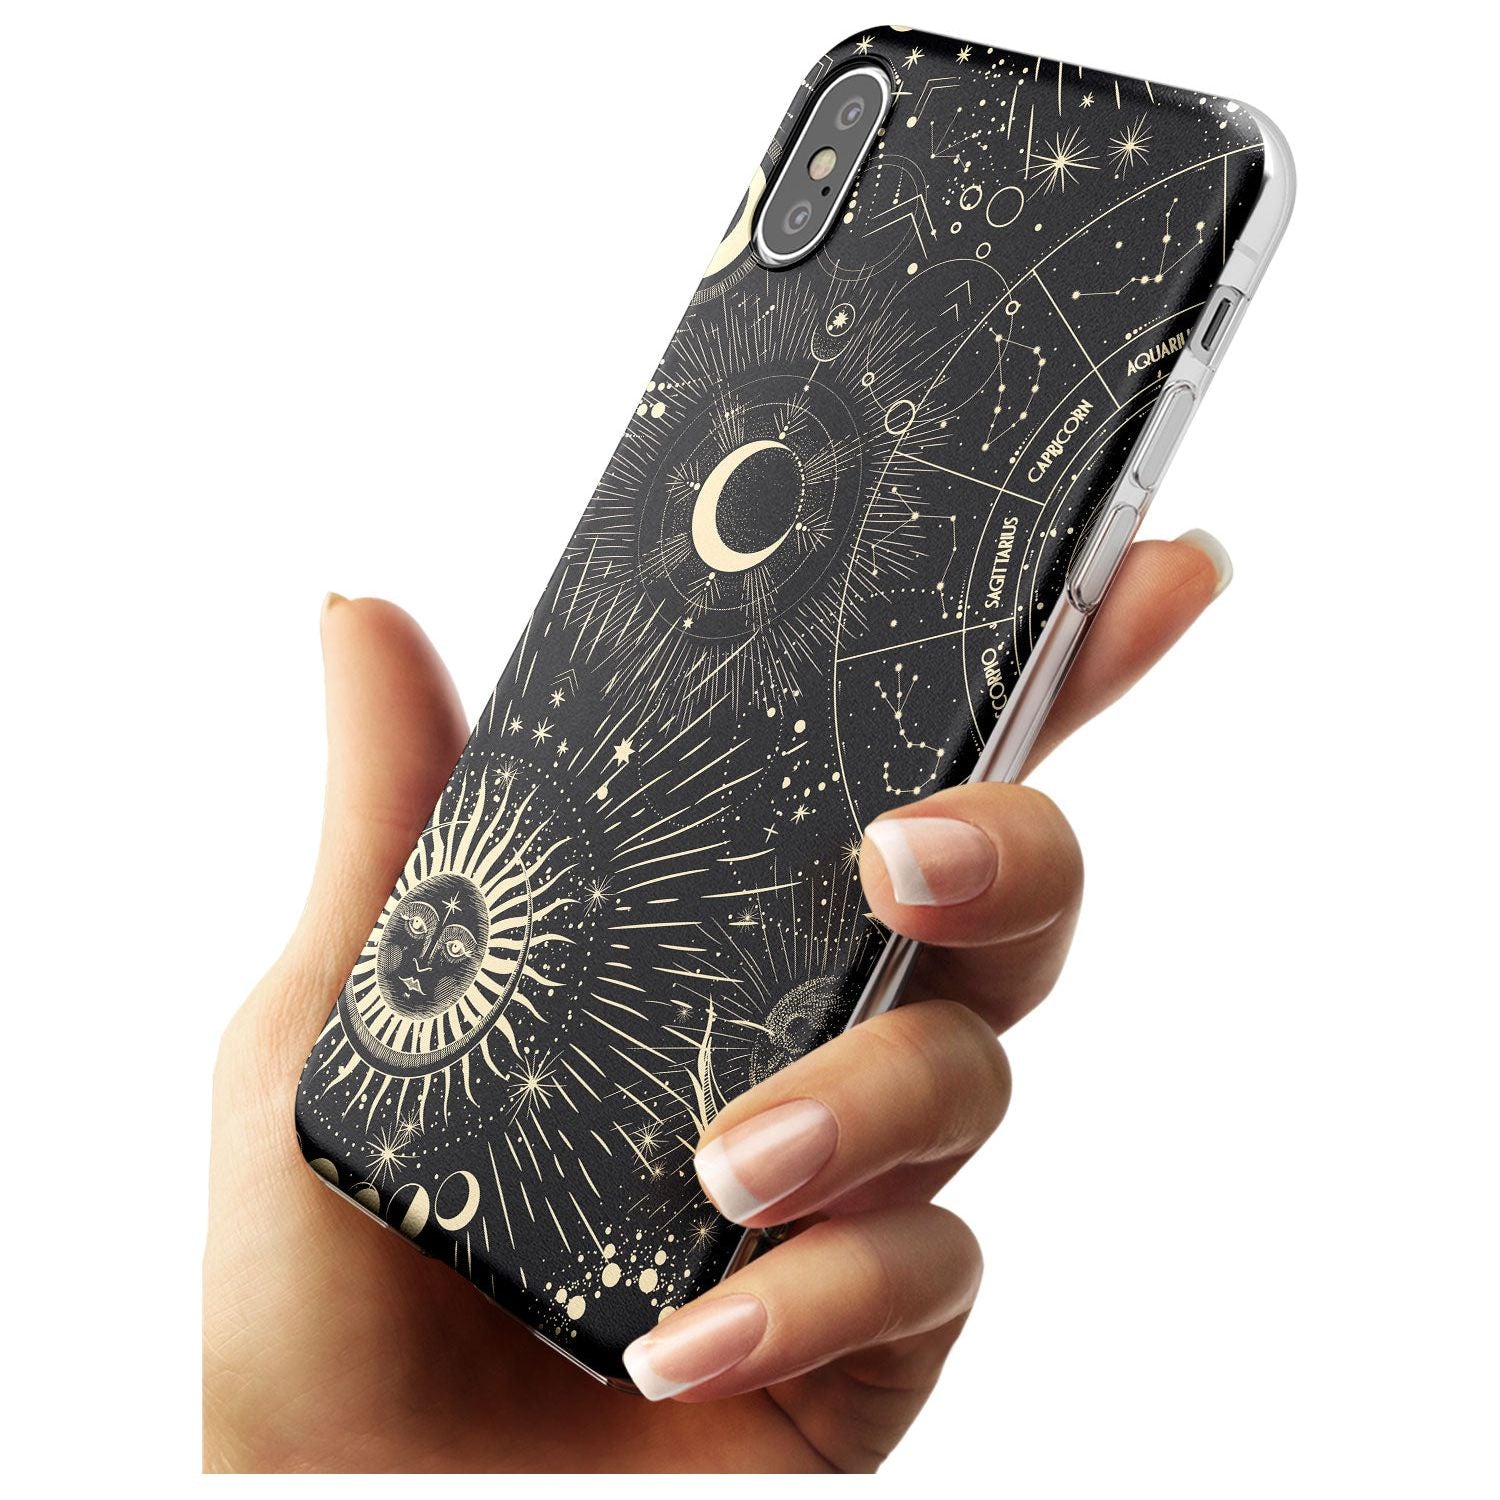 Sun & Symbols Black Impact Phone Case for iPhone X XS Max XR